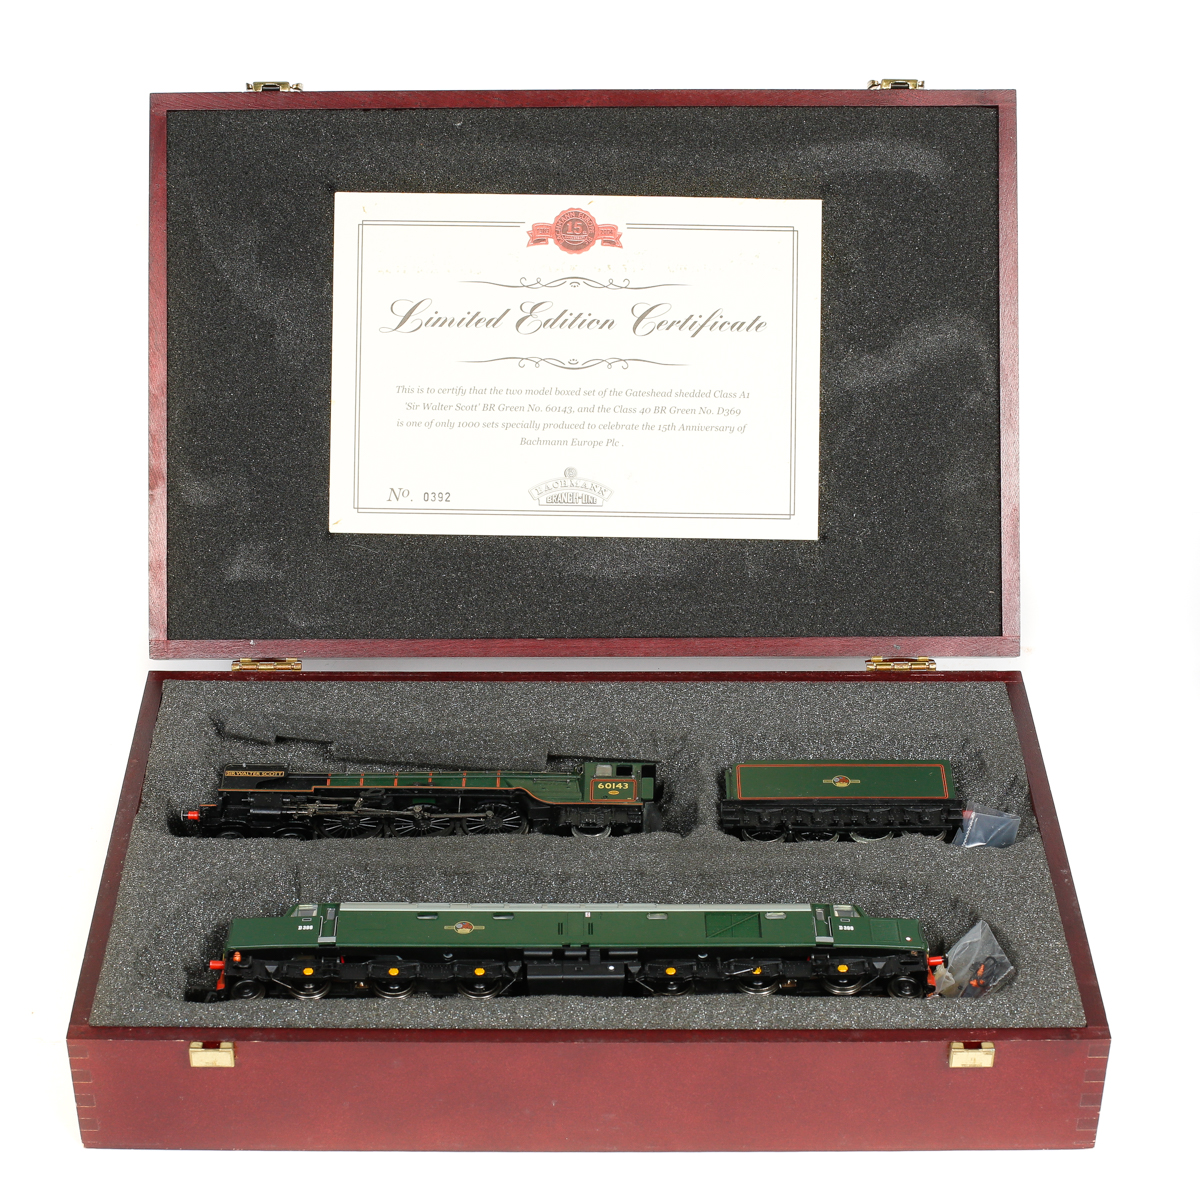 A Bachmann Branchline 2-locomotive set. Comprising 2x BR locomotives in dark green livery. A Class